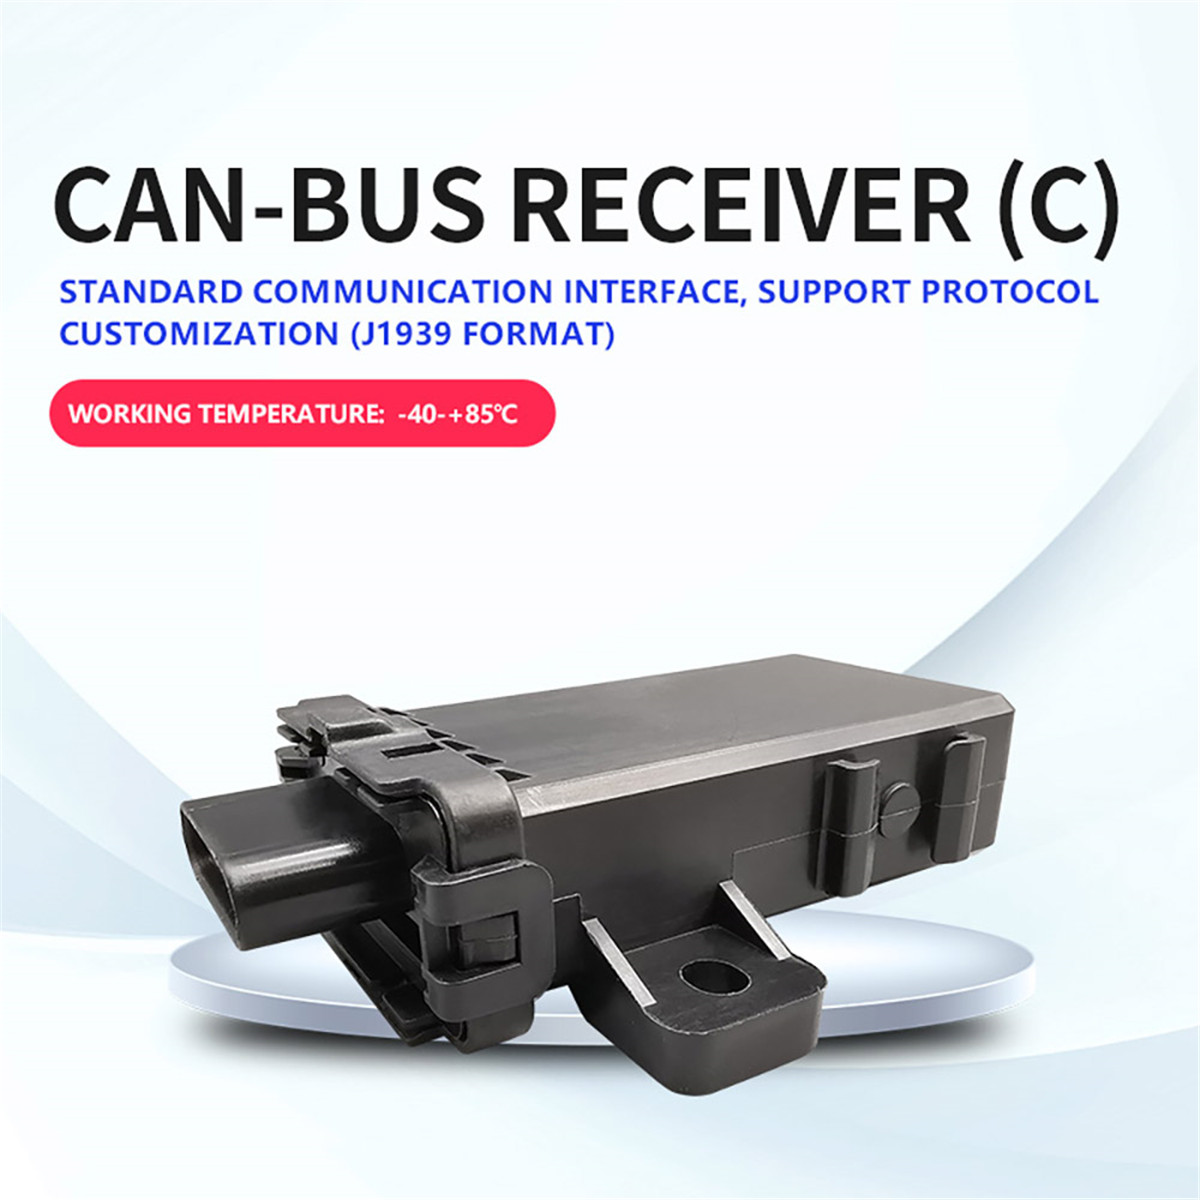 Receptor CAN-Bus01 (9)